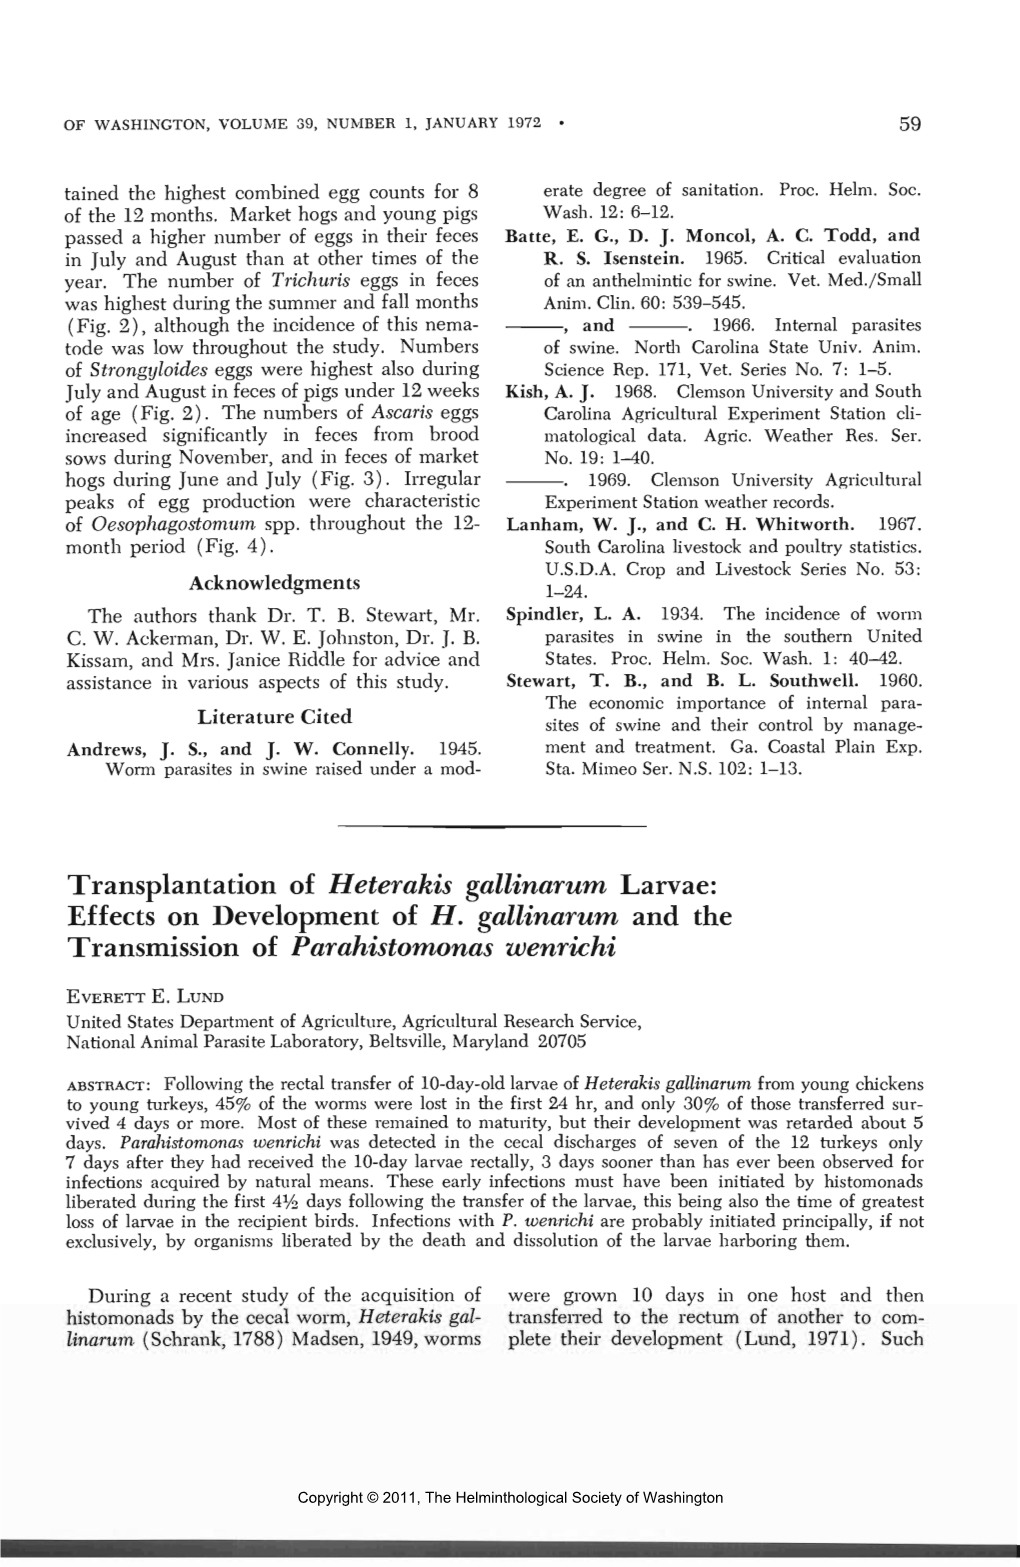 Transplantation of Heterakis Gallinarum Larvae: Effects on Development of H